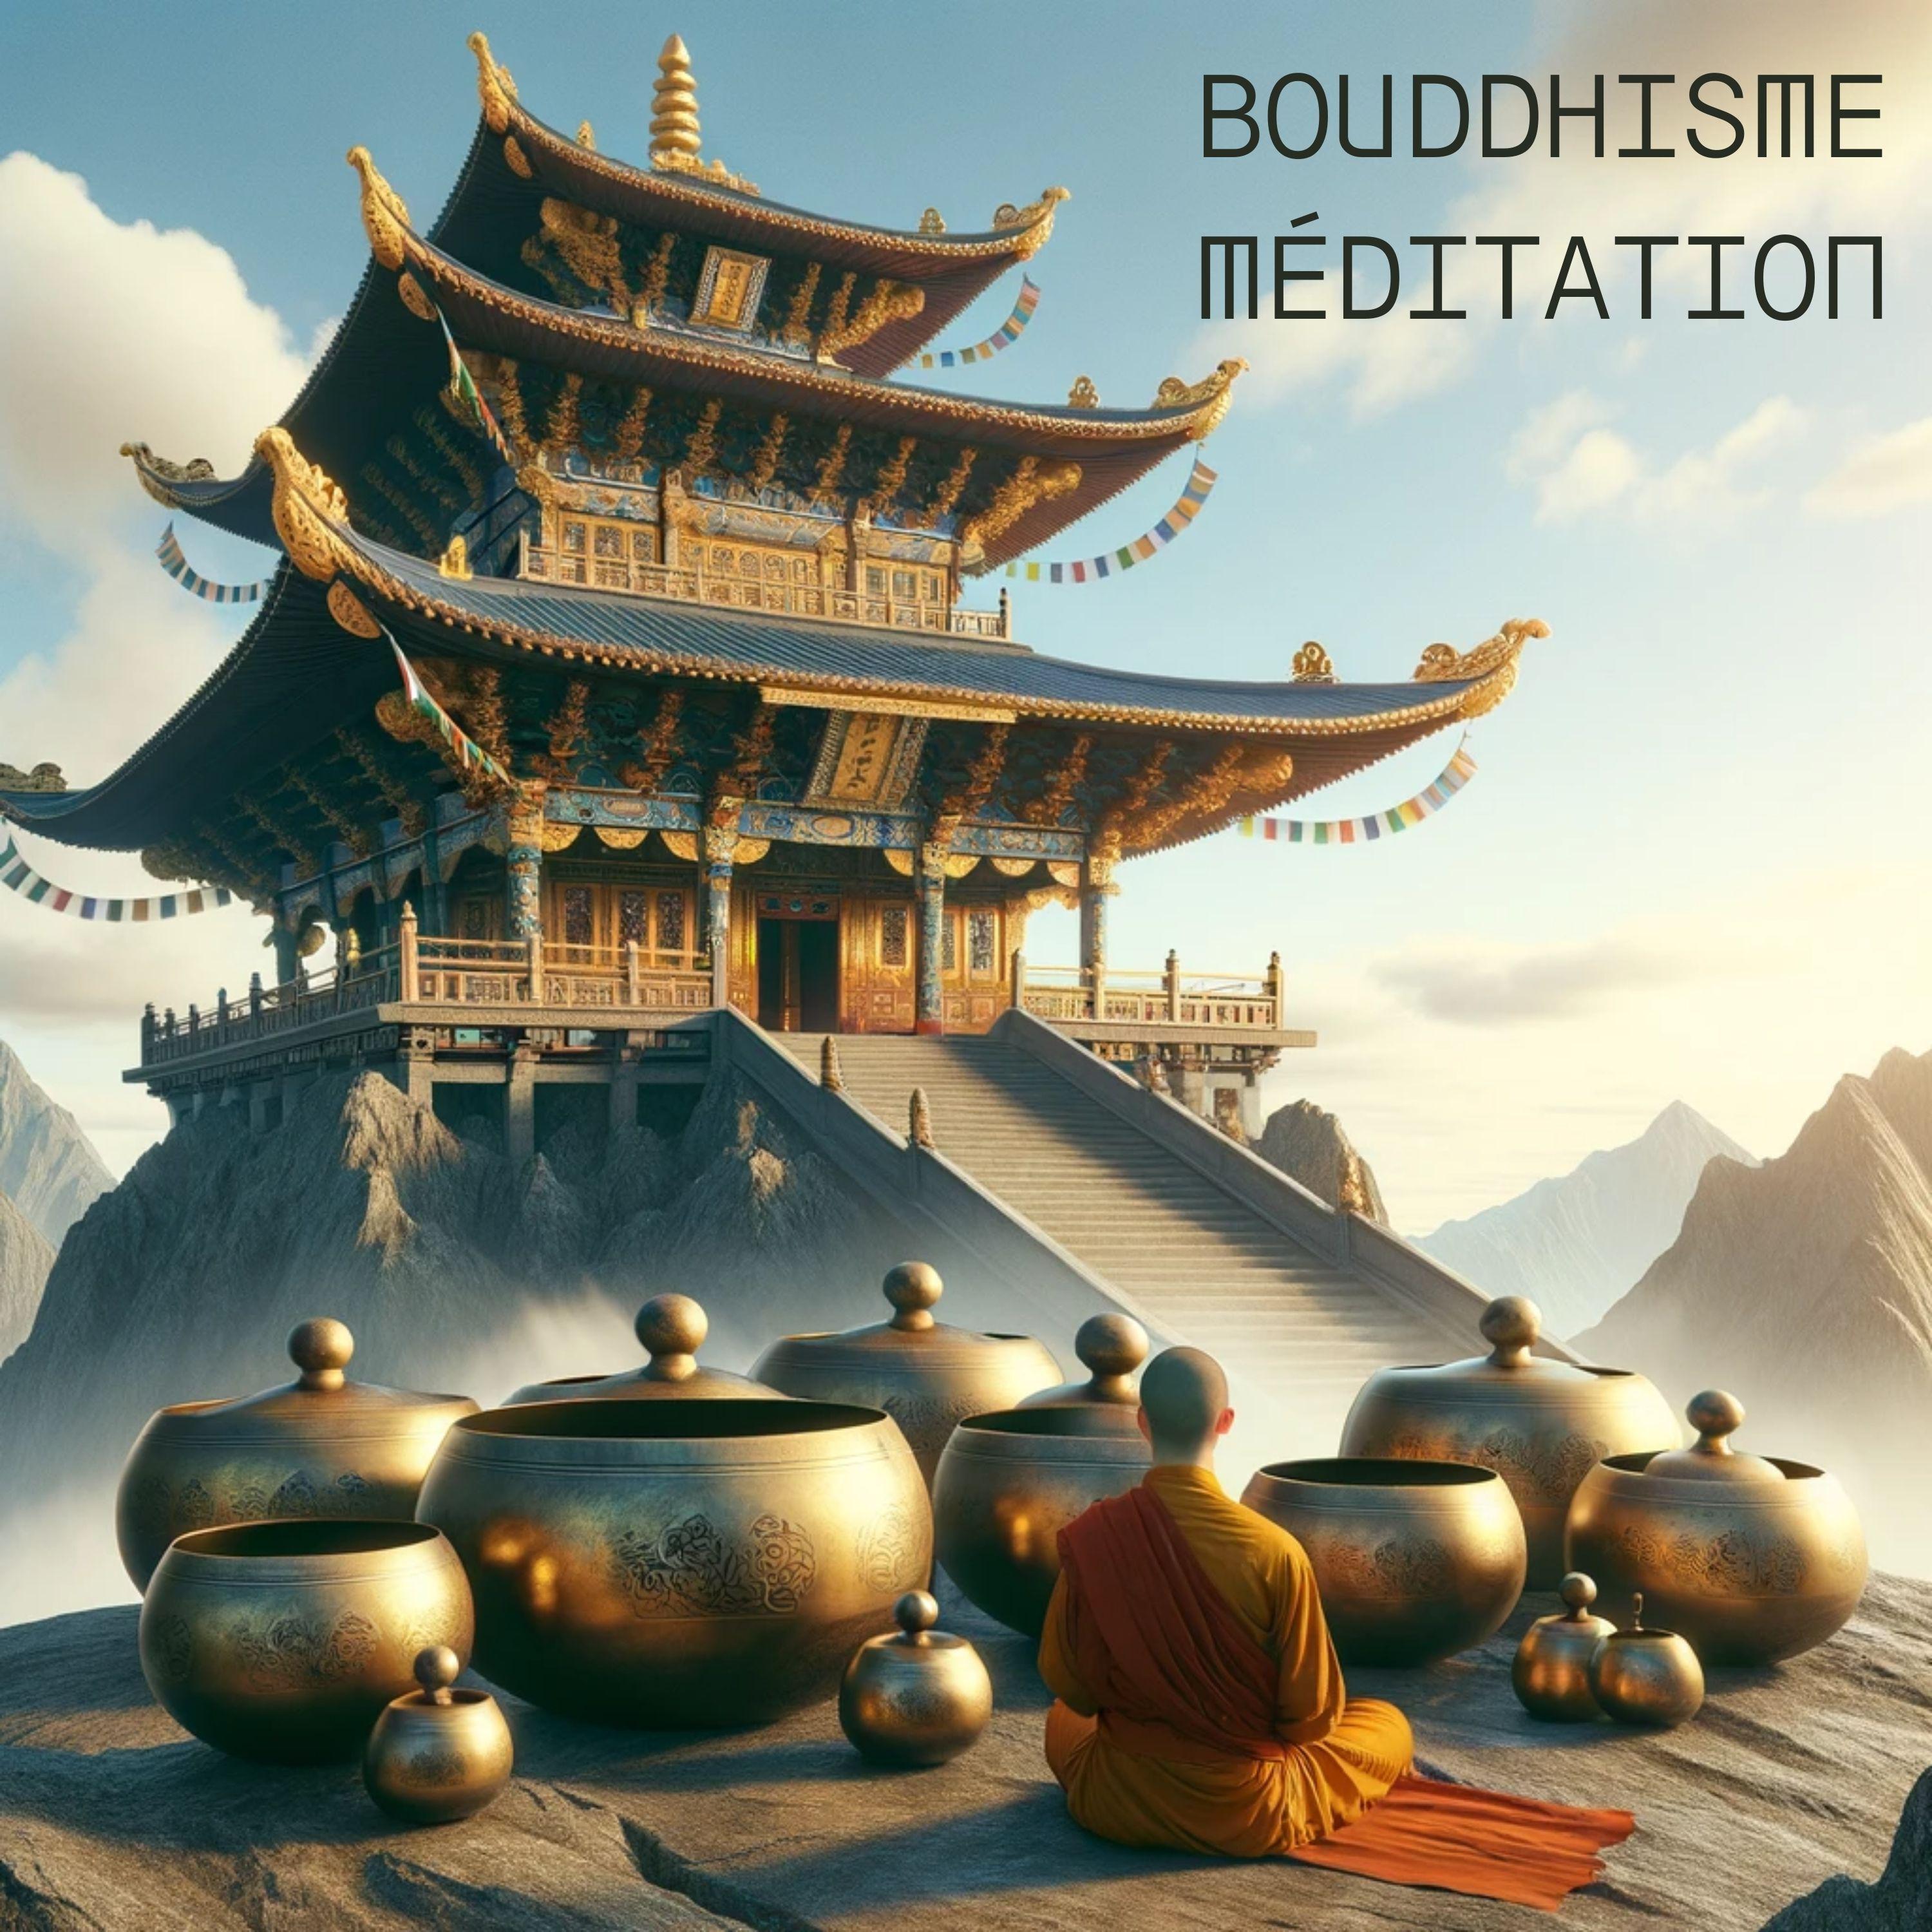 Bouddha réflexion zone calme - Compréhension plus profonde